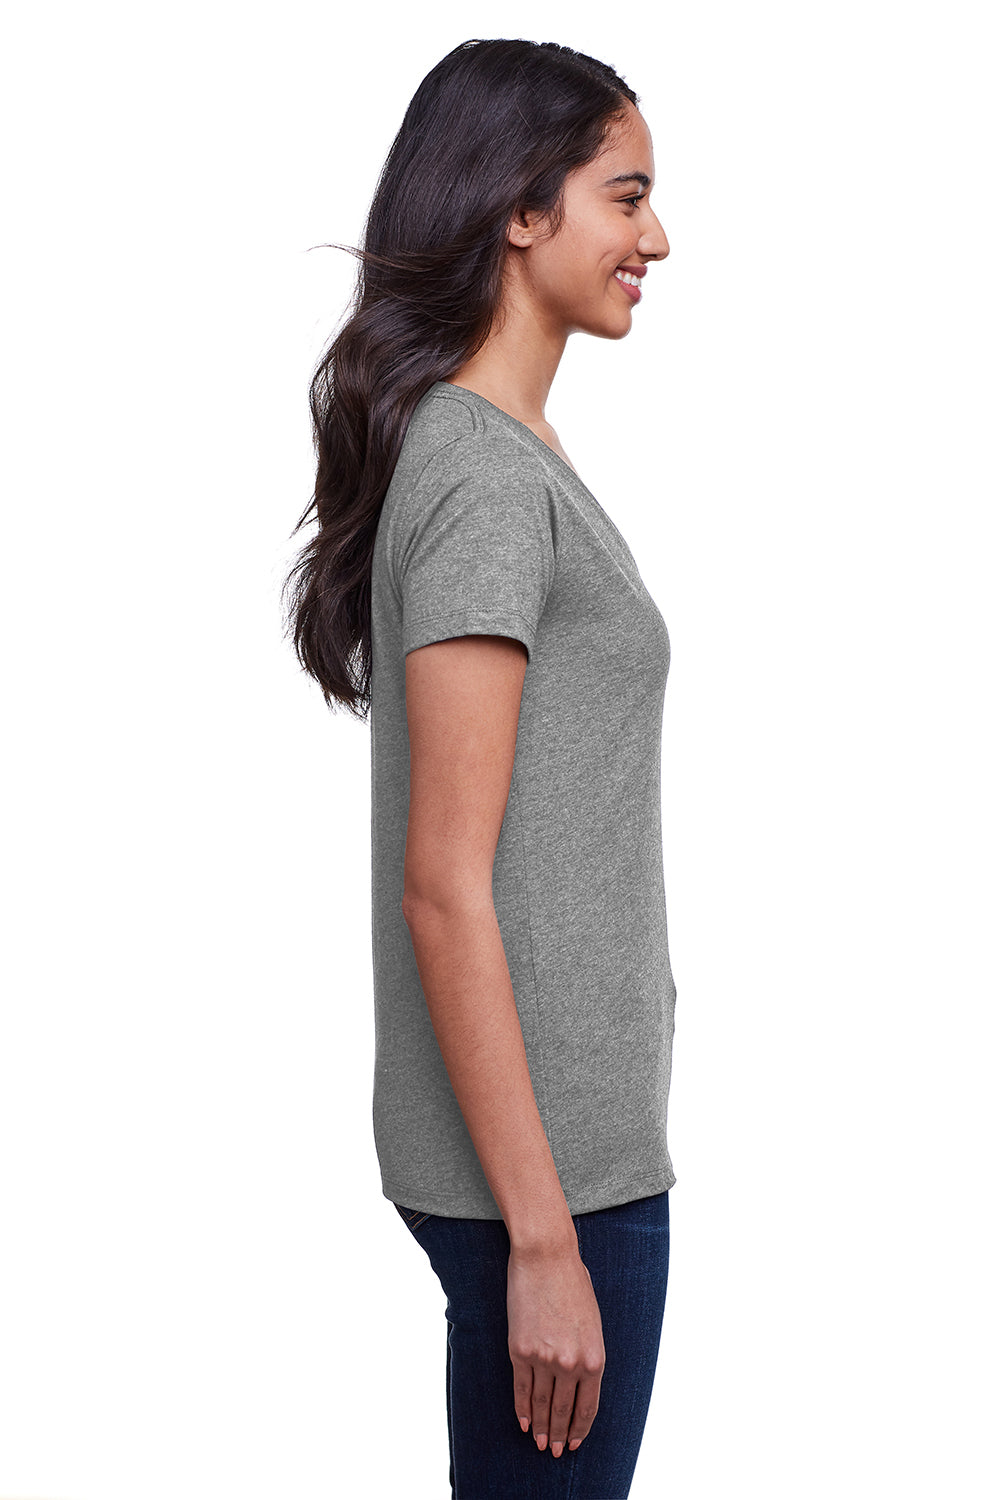 Next Level N4240 Womens Eco Performance Moisture Wicking Short Sleeve V-Neck T-Shirt Heather Dark Grey Side